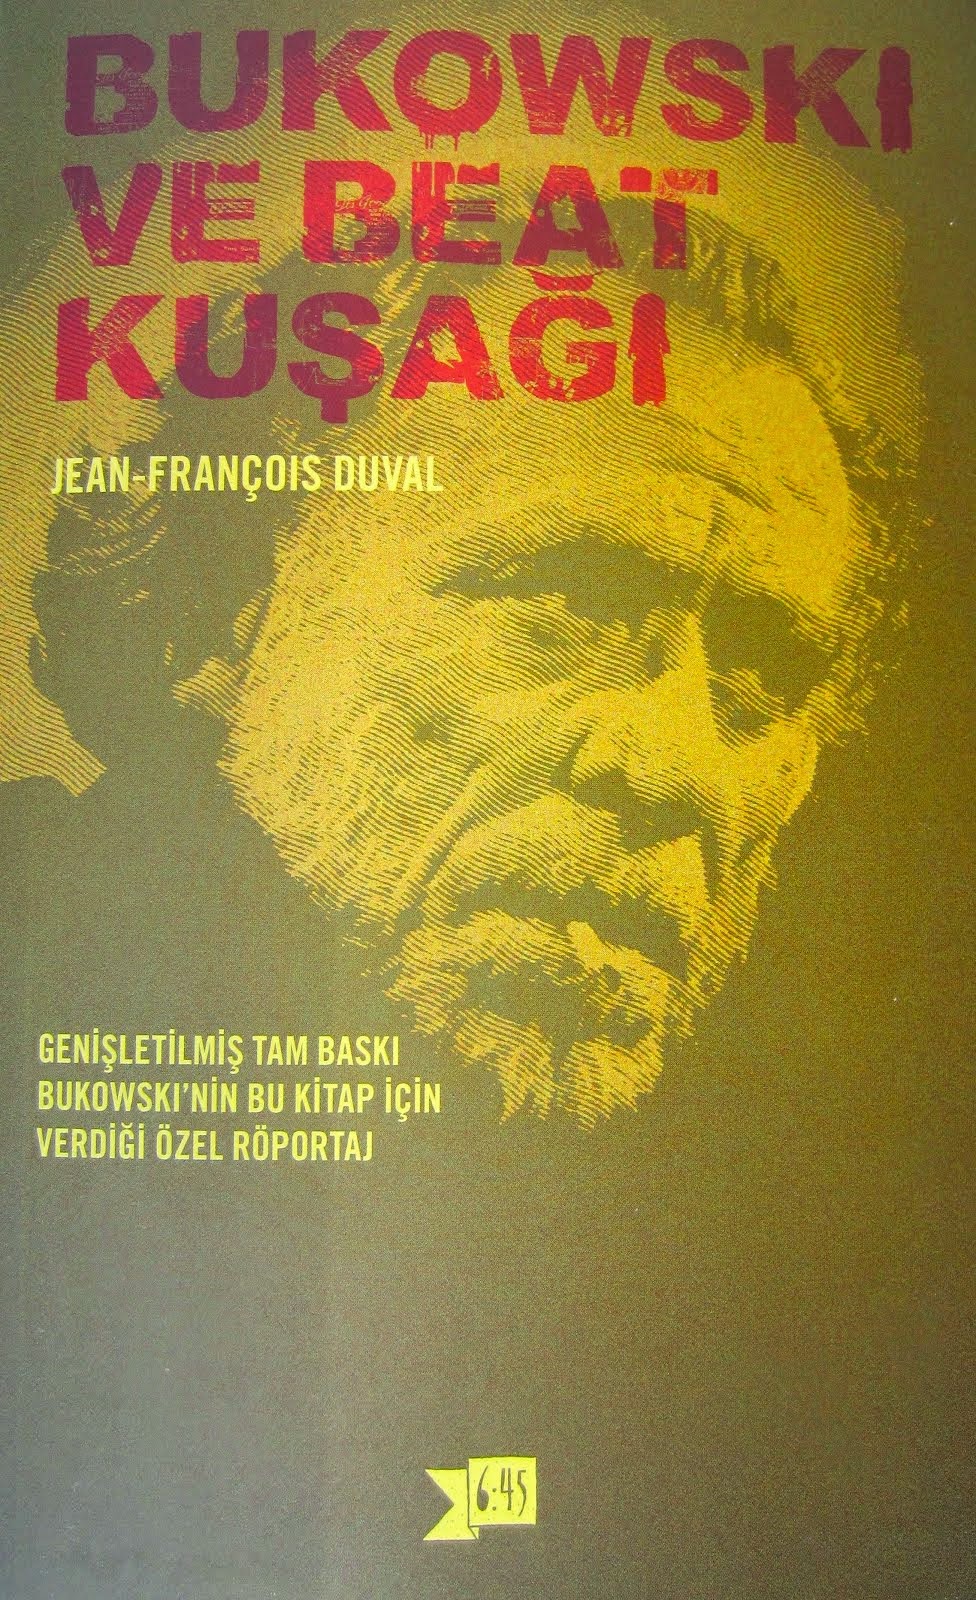 «Bukowski ve Beat Kusagi», éd. turque 2015.